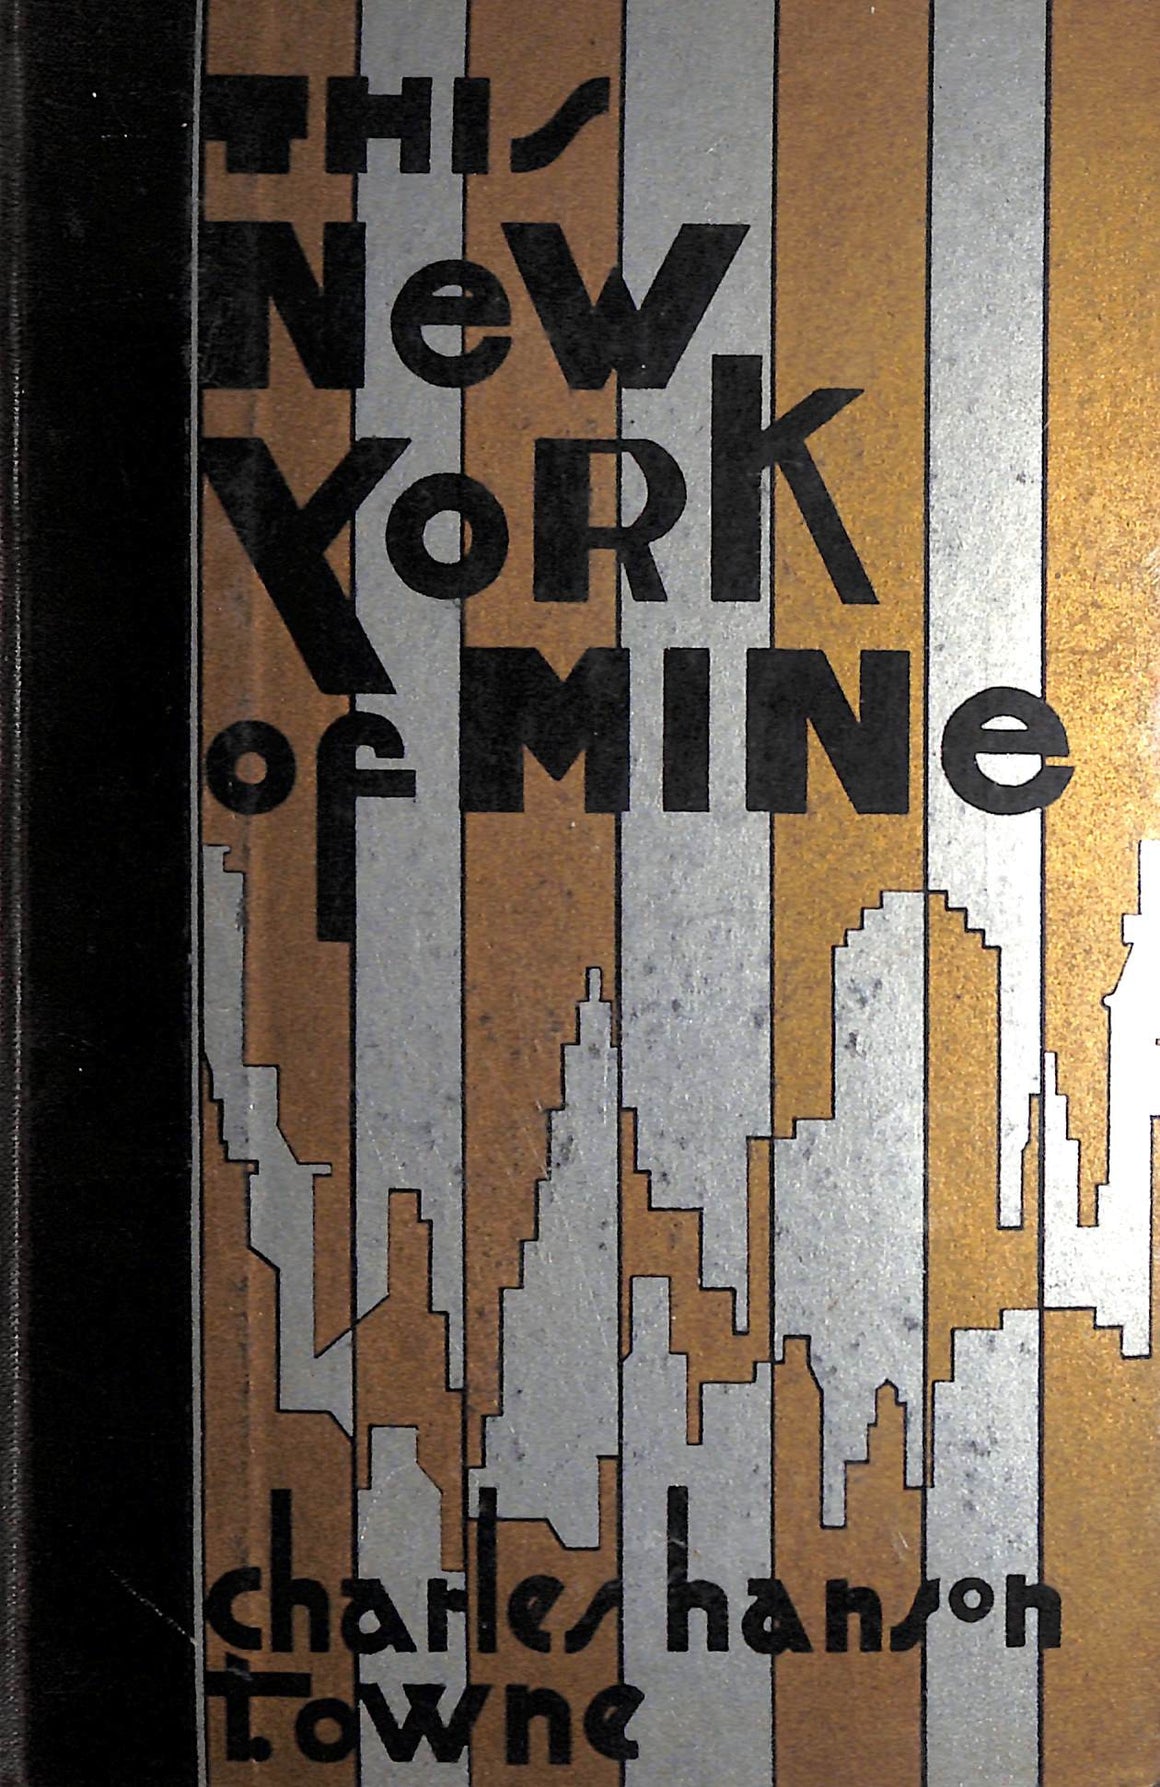 "This New York Of Mine" 1931 TOWNE, Charles Hanson